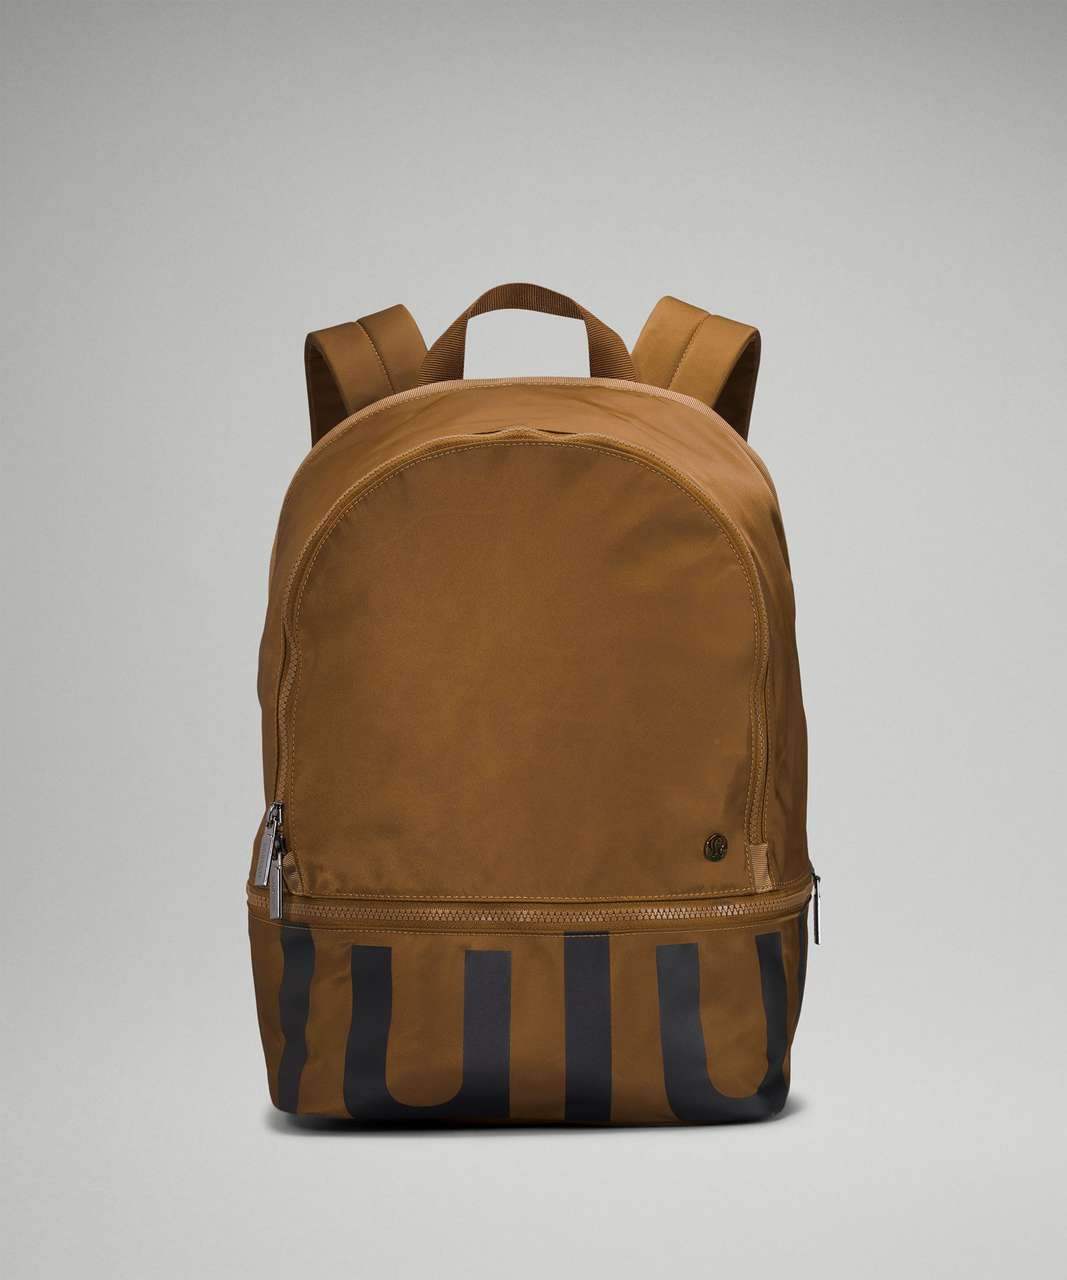 Lululemon City Adventurer Backpack *Mini 11L - Bronze Green - lulu fanatics